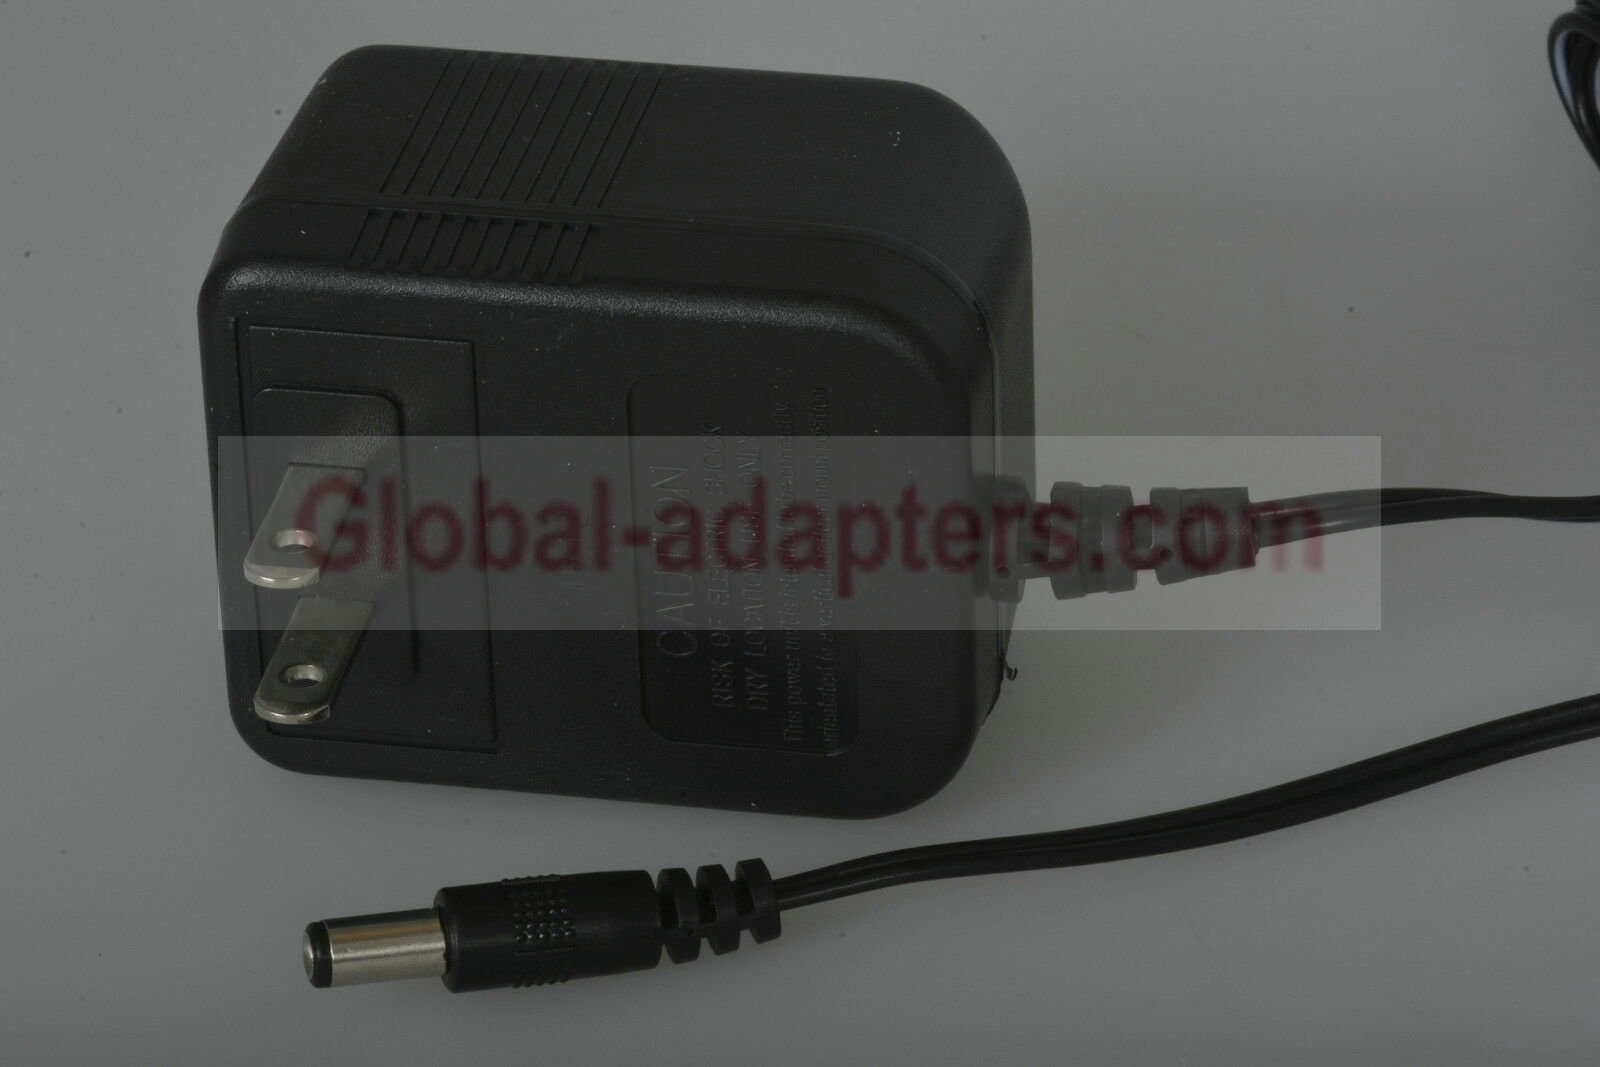 New 12V 0.2A 2.1mm x 5.5mm DCU120020G2420 Power Supply Ac Adapter